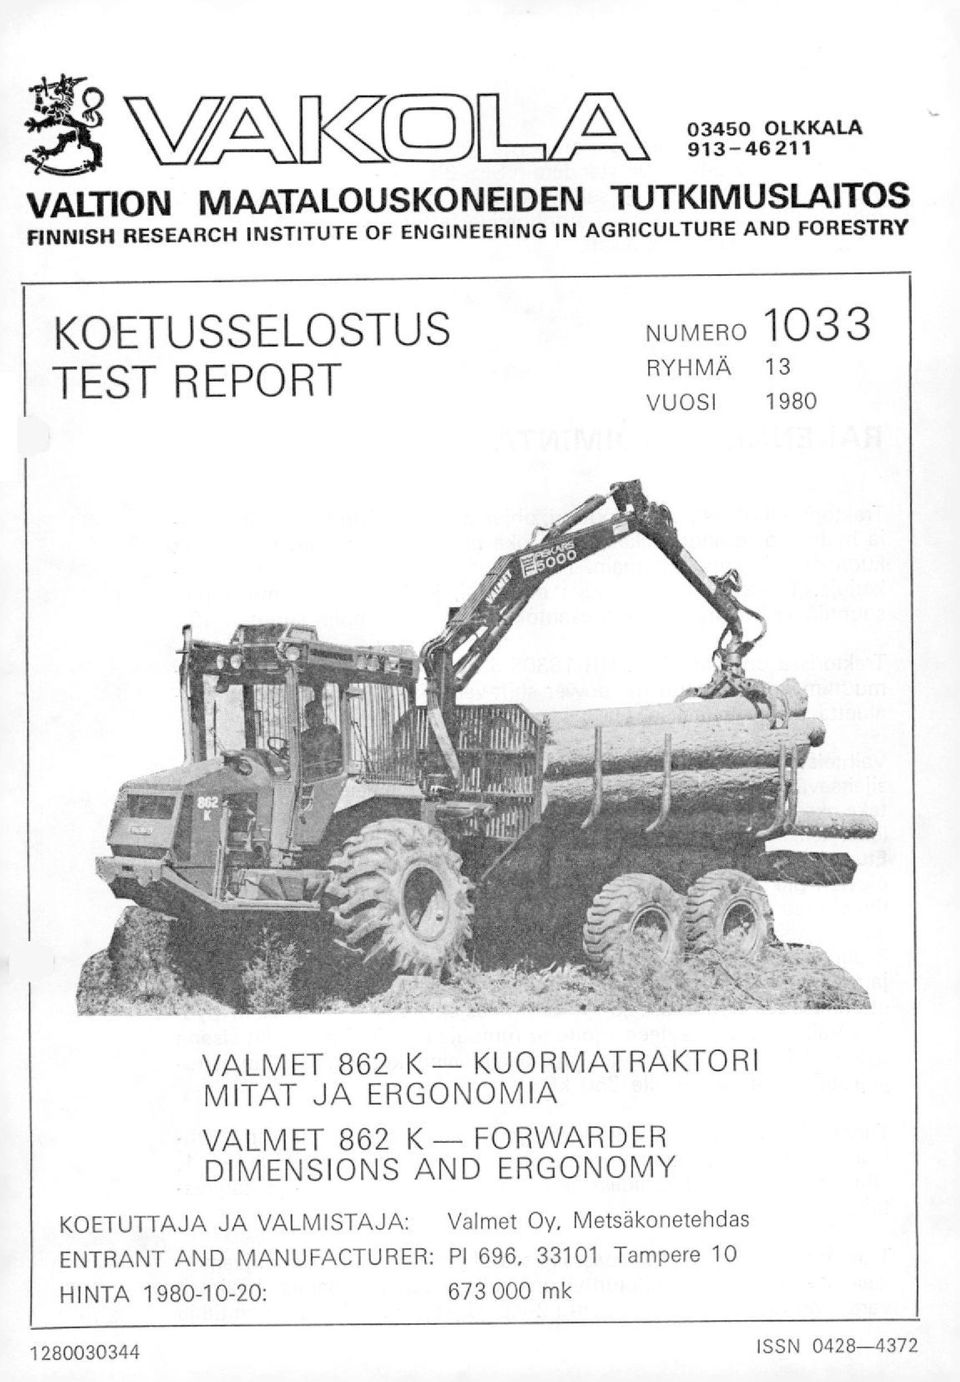 AGRICULTURE AND FORESTRY KOETUSSELOSTUS TEST REPORT NUMERO 1033 RYHMÄ 13 VUOSI 1980 II 1q111, '1 tai ij!